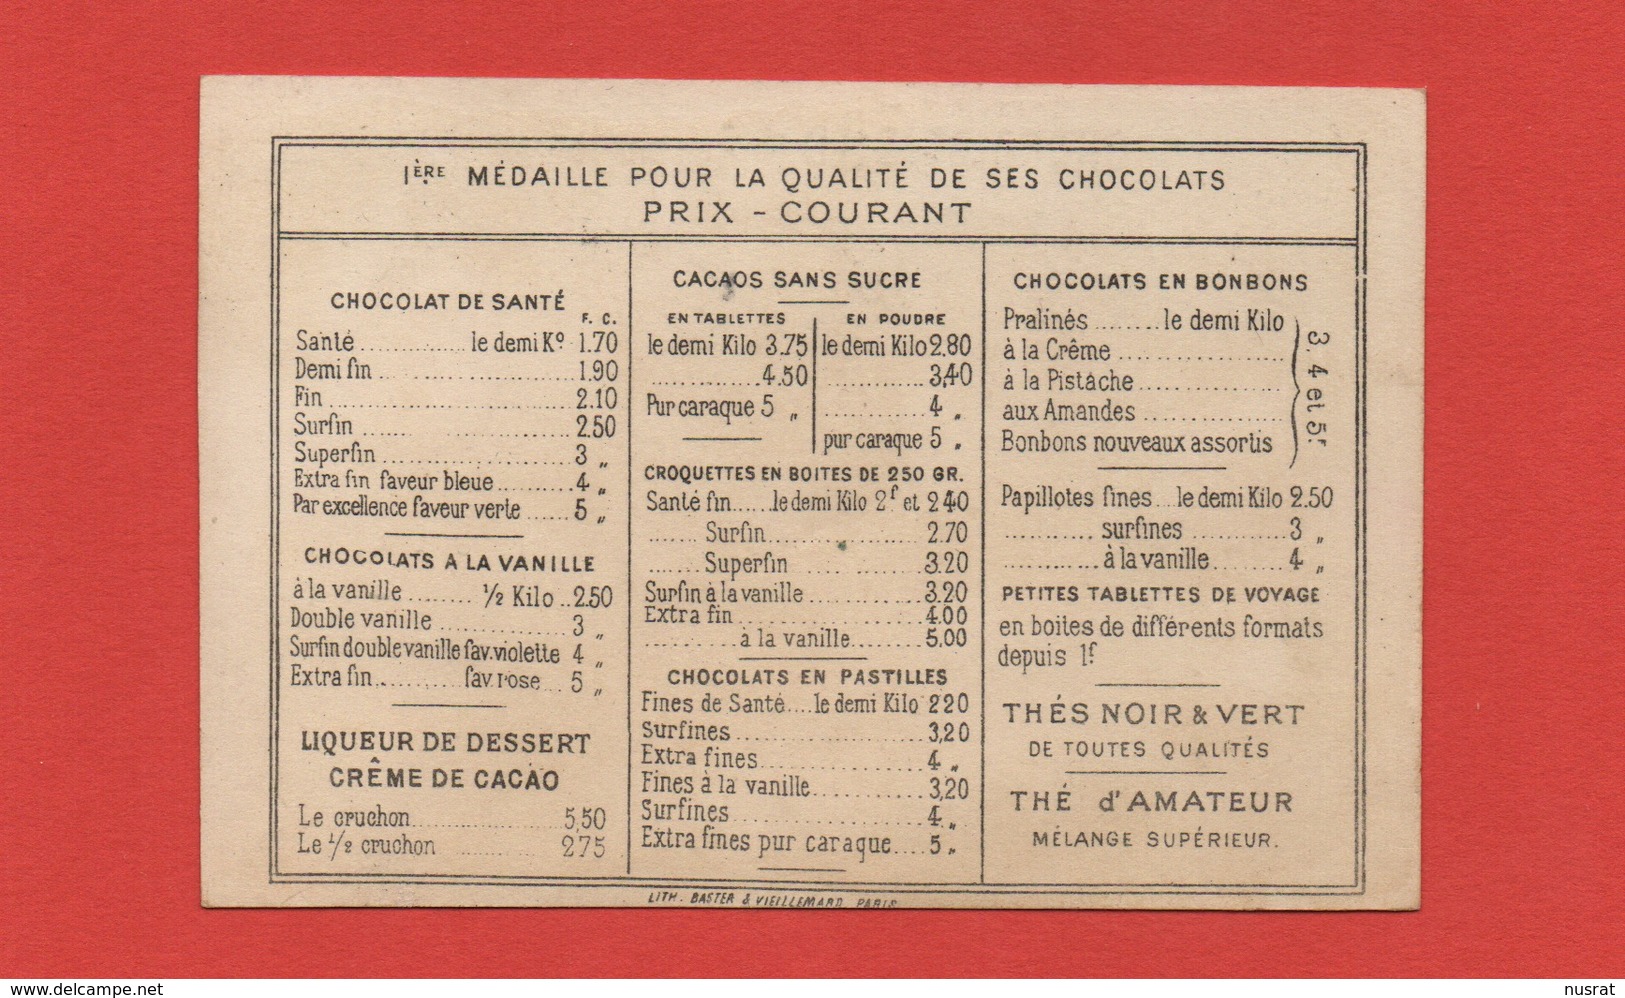 Chocolat Ibled, Jolie Chromo Lith. Baster & Viellemard, La Vie Parisienne, A Mabile, Manège, Kiosque - Ibled